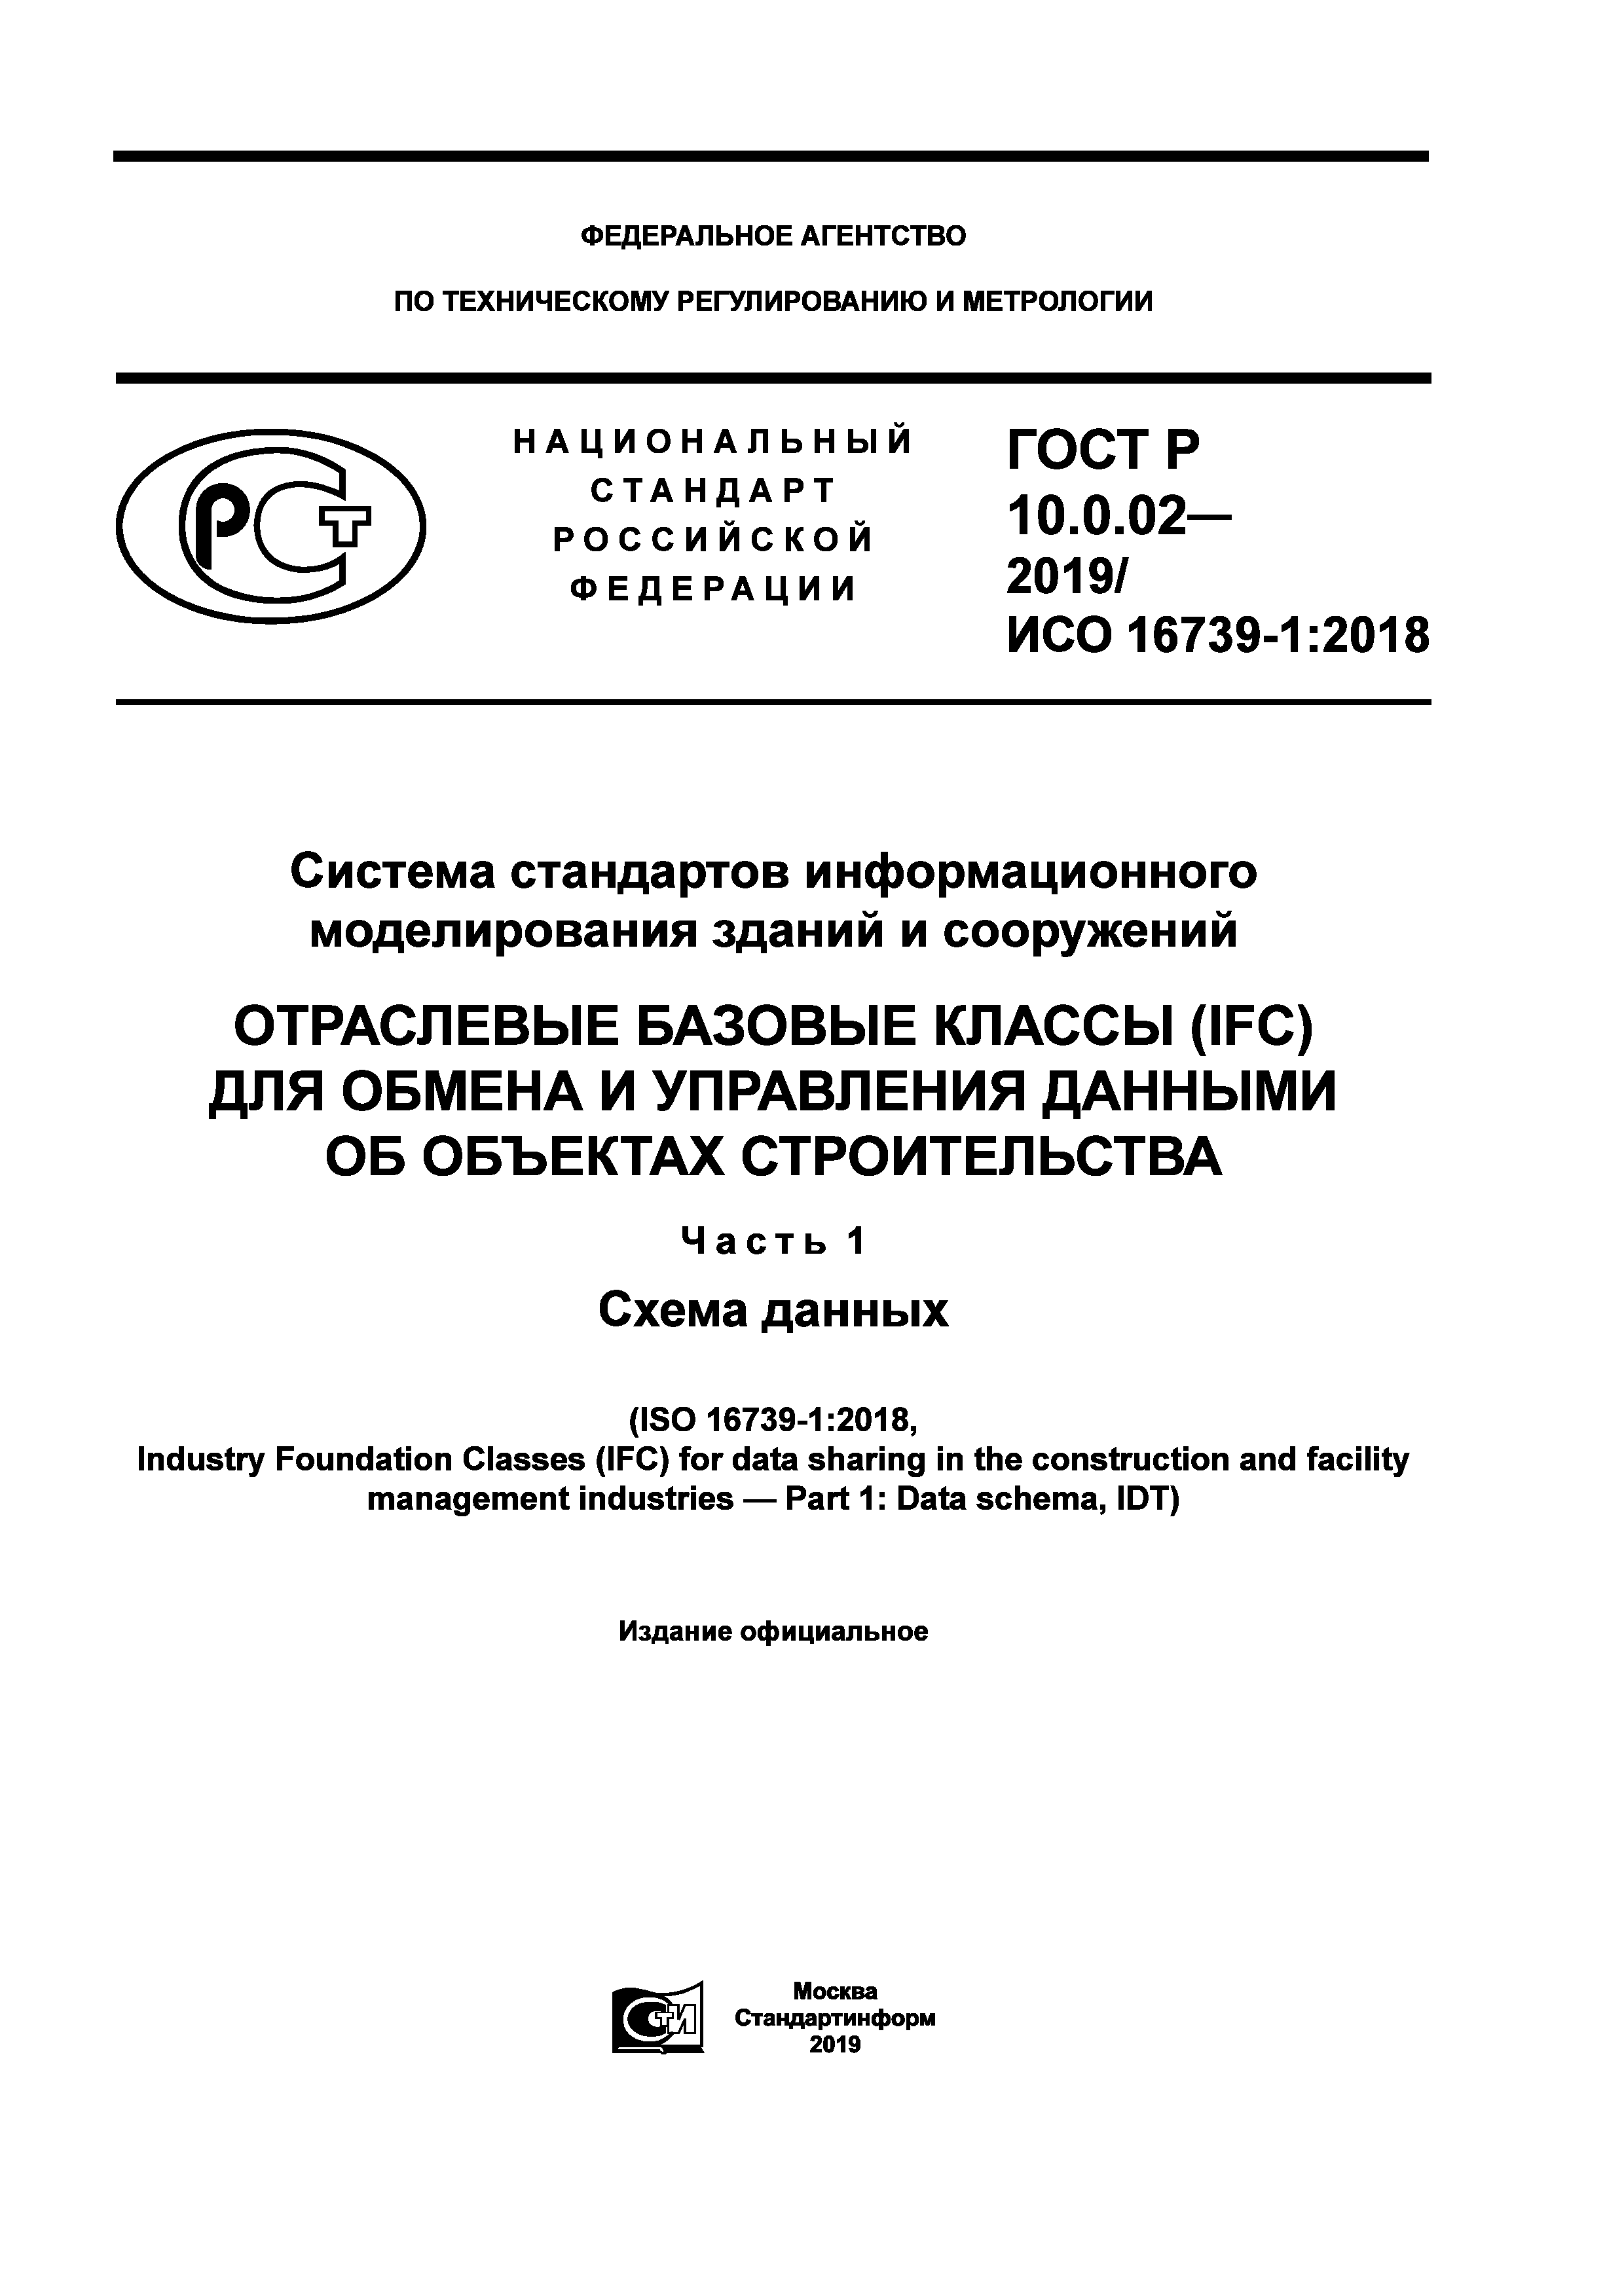 ГОСТ Р 10.0.02-2019